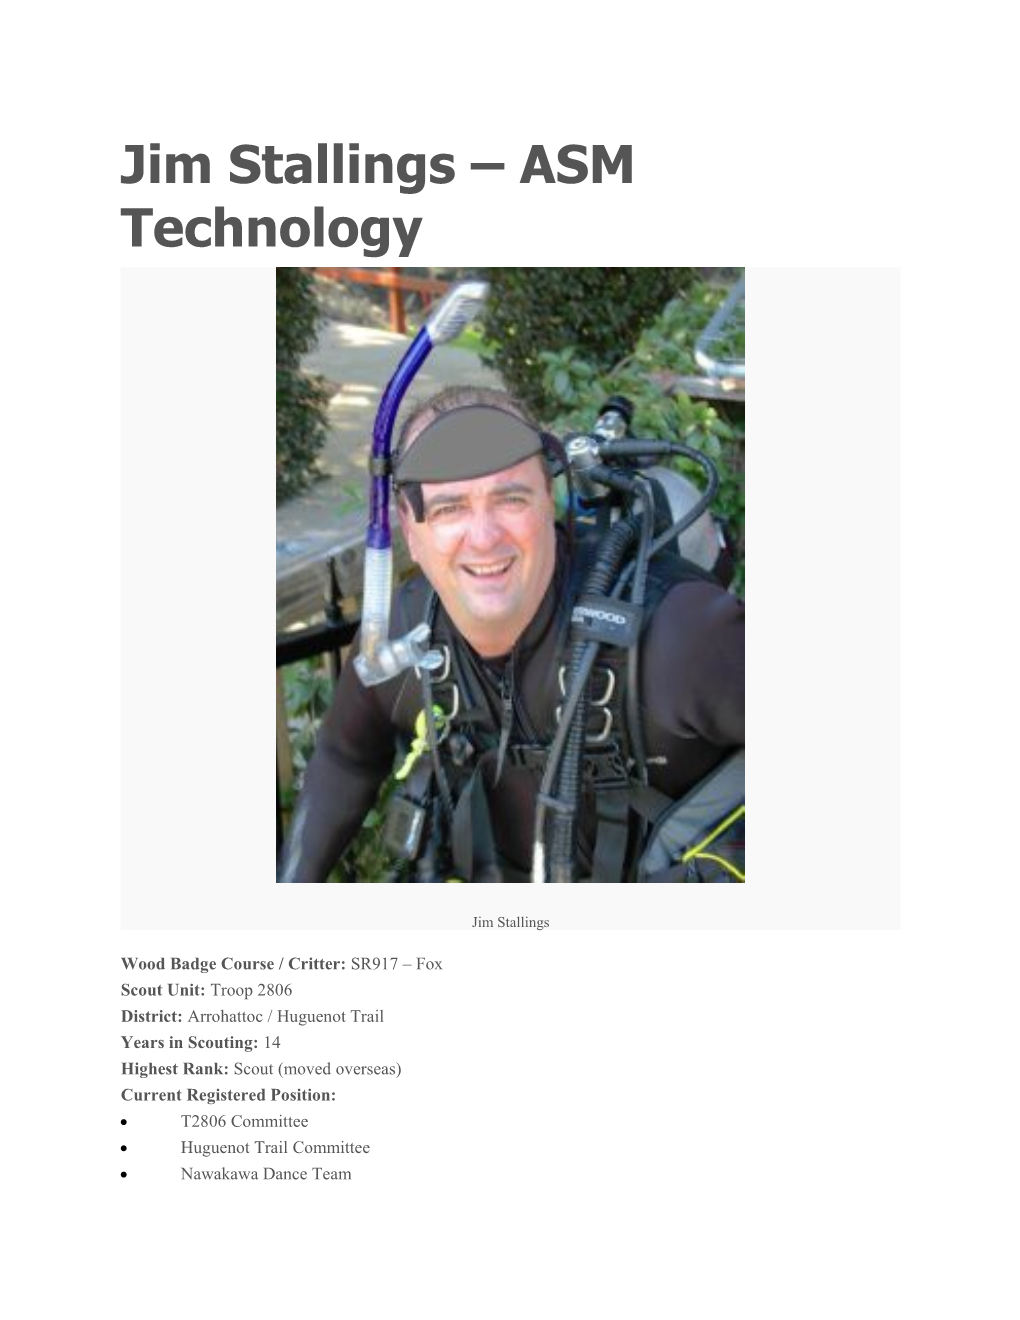 Jim Stallings ASM Technology